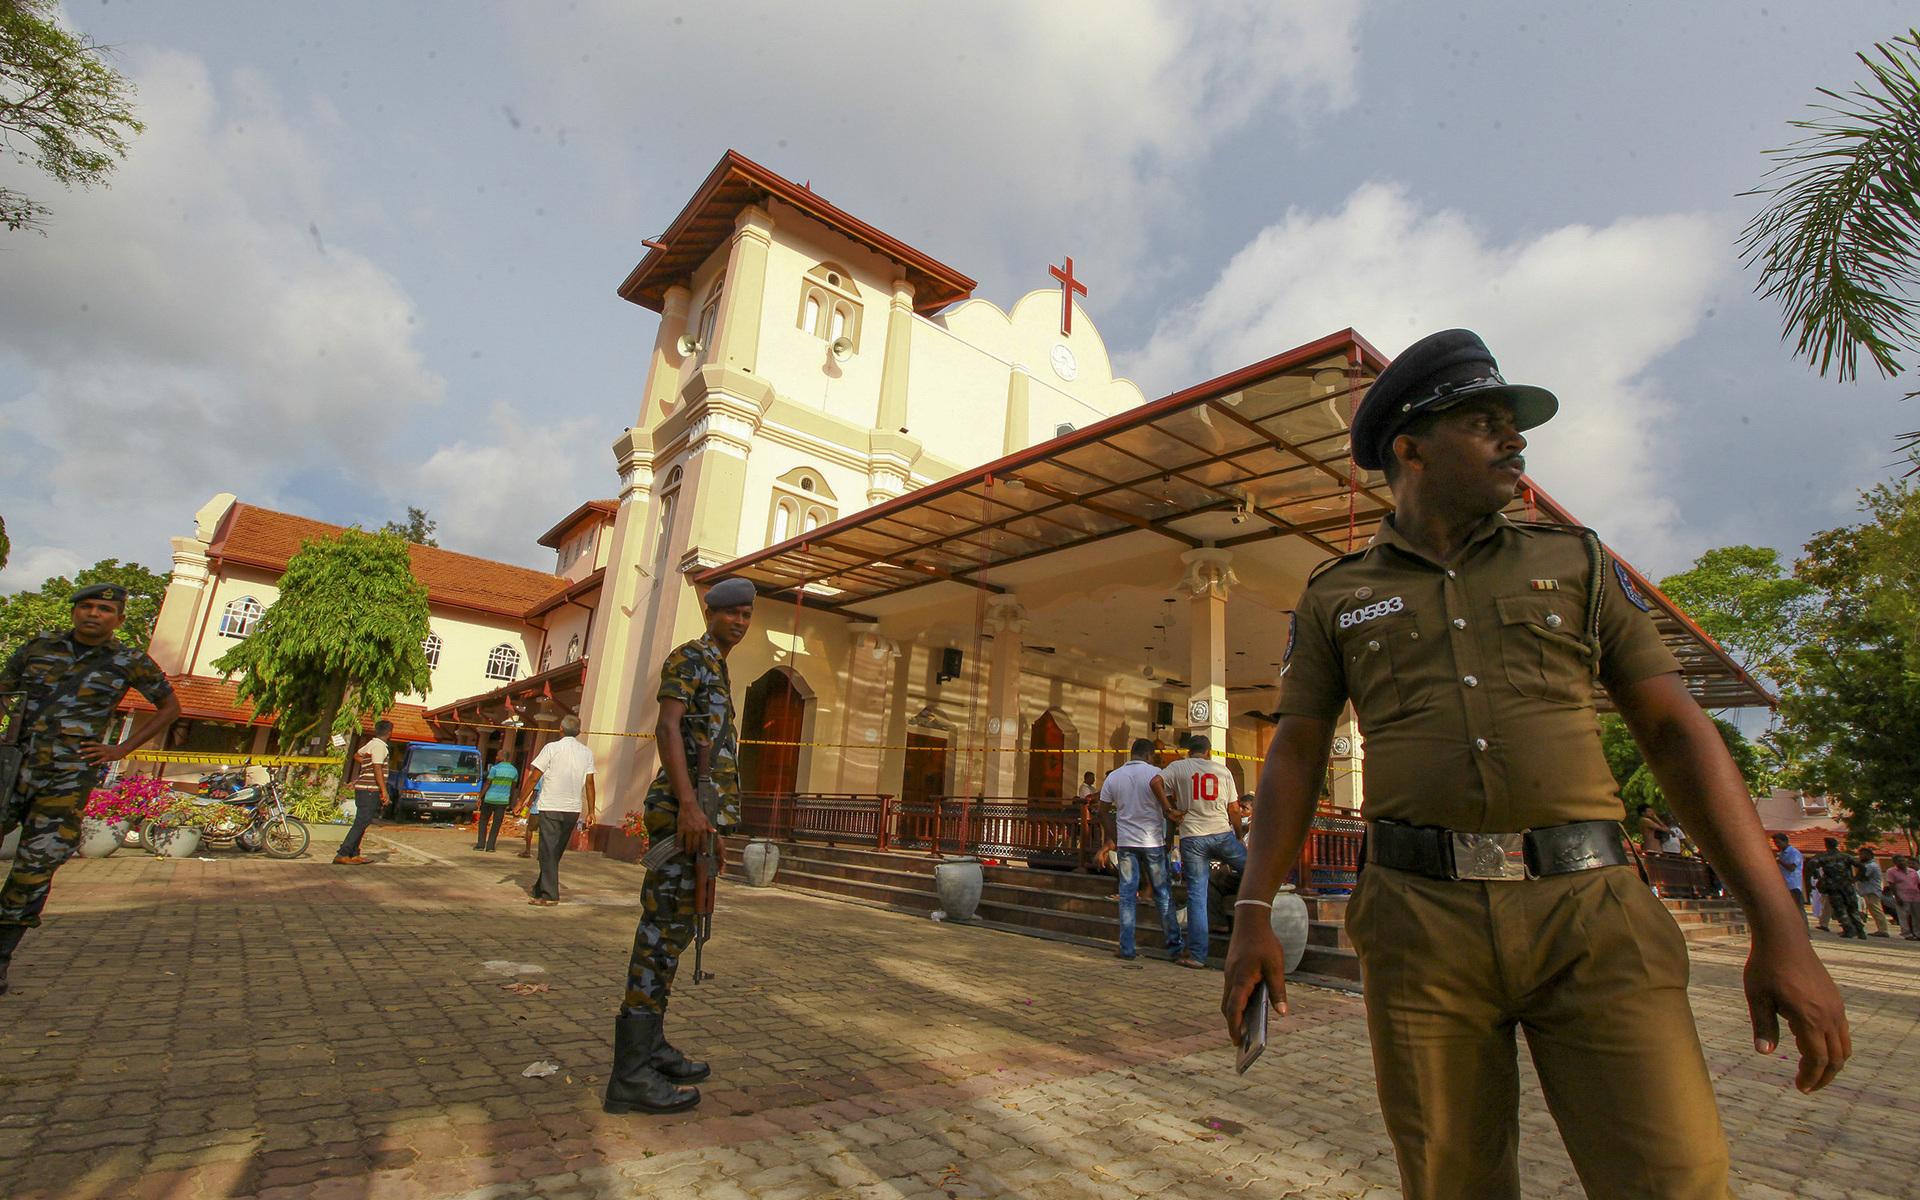 Lankesiska soldater säkrar området runt St. Sebastians kyrka i Negombo norr om Colombo.